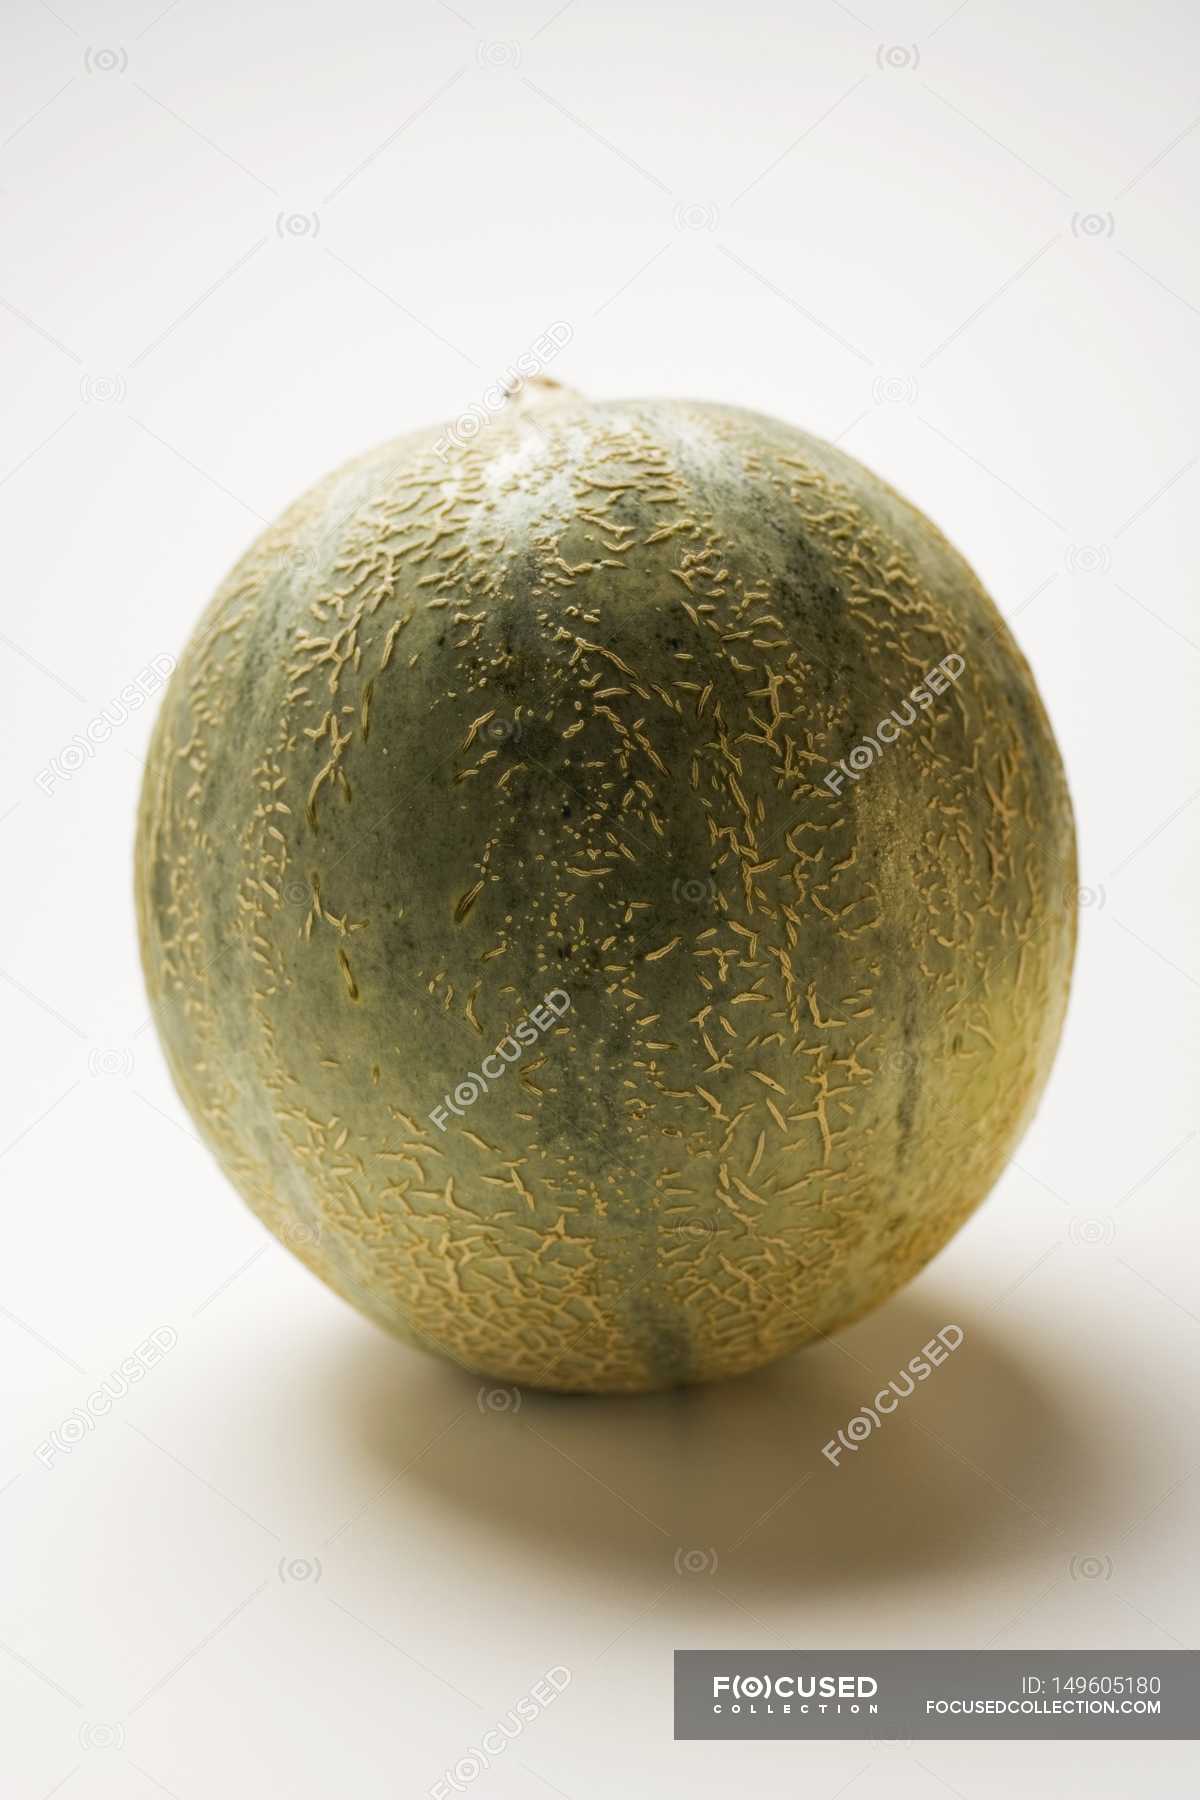 Fresh Galia melon — Stock Photo | #149605180